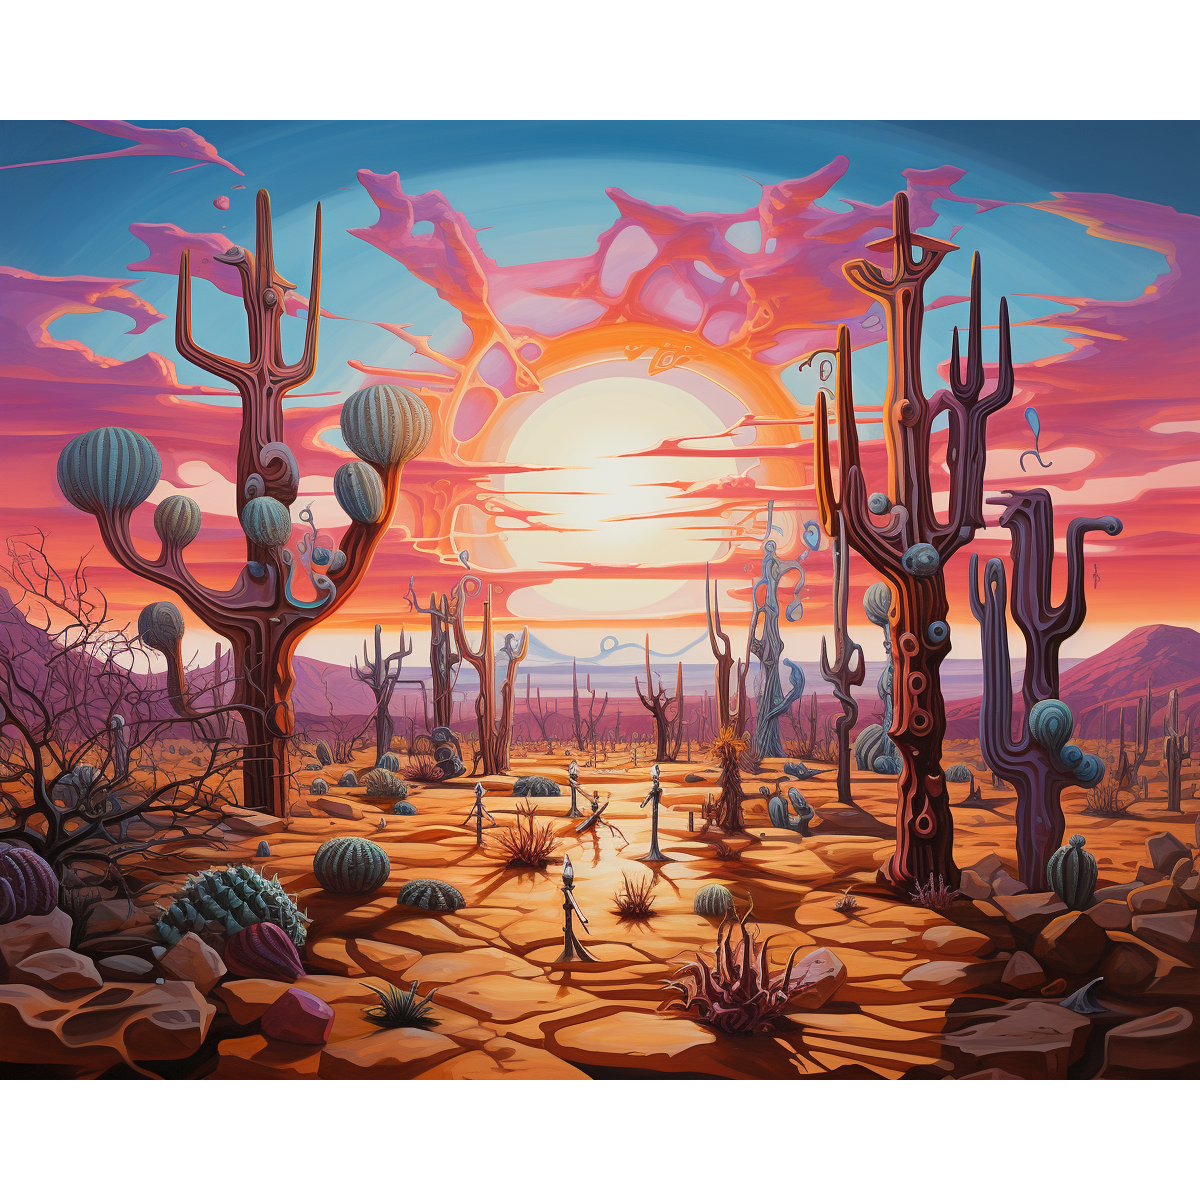 Trippiger Kaktus-Sonnenuntergang